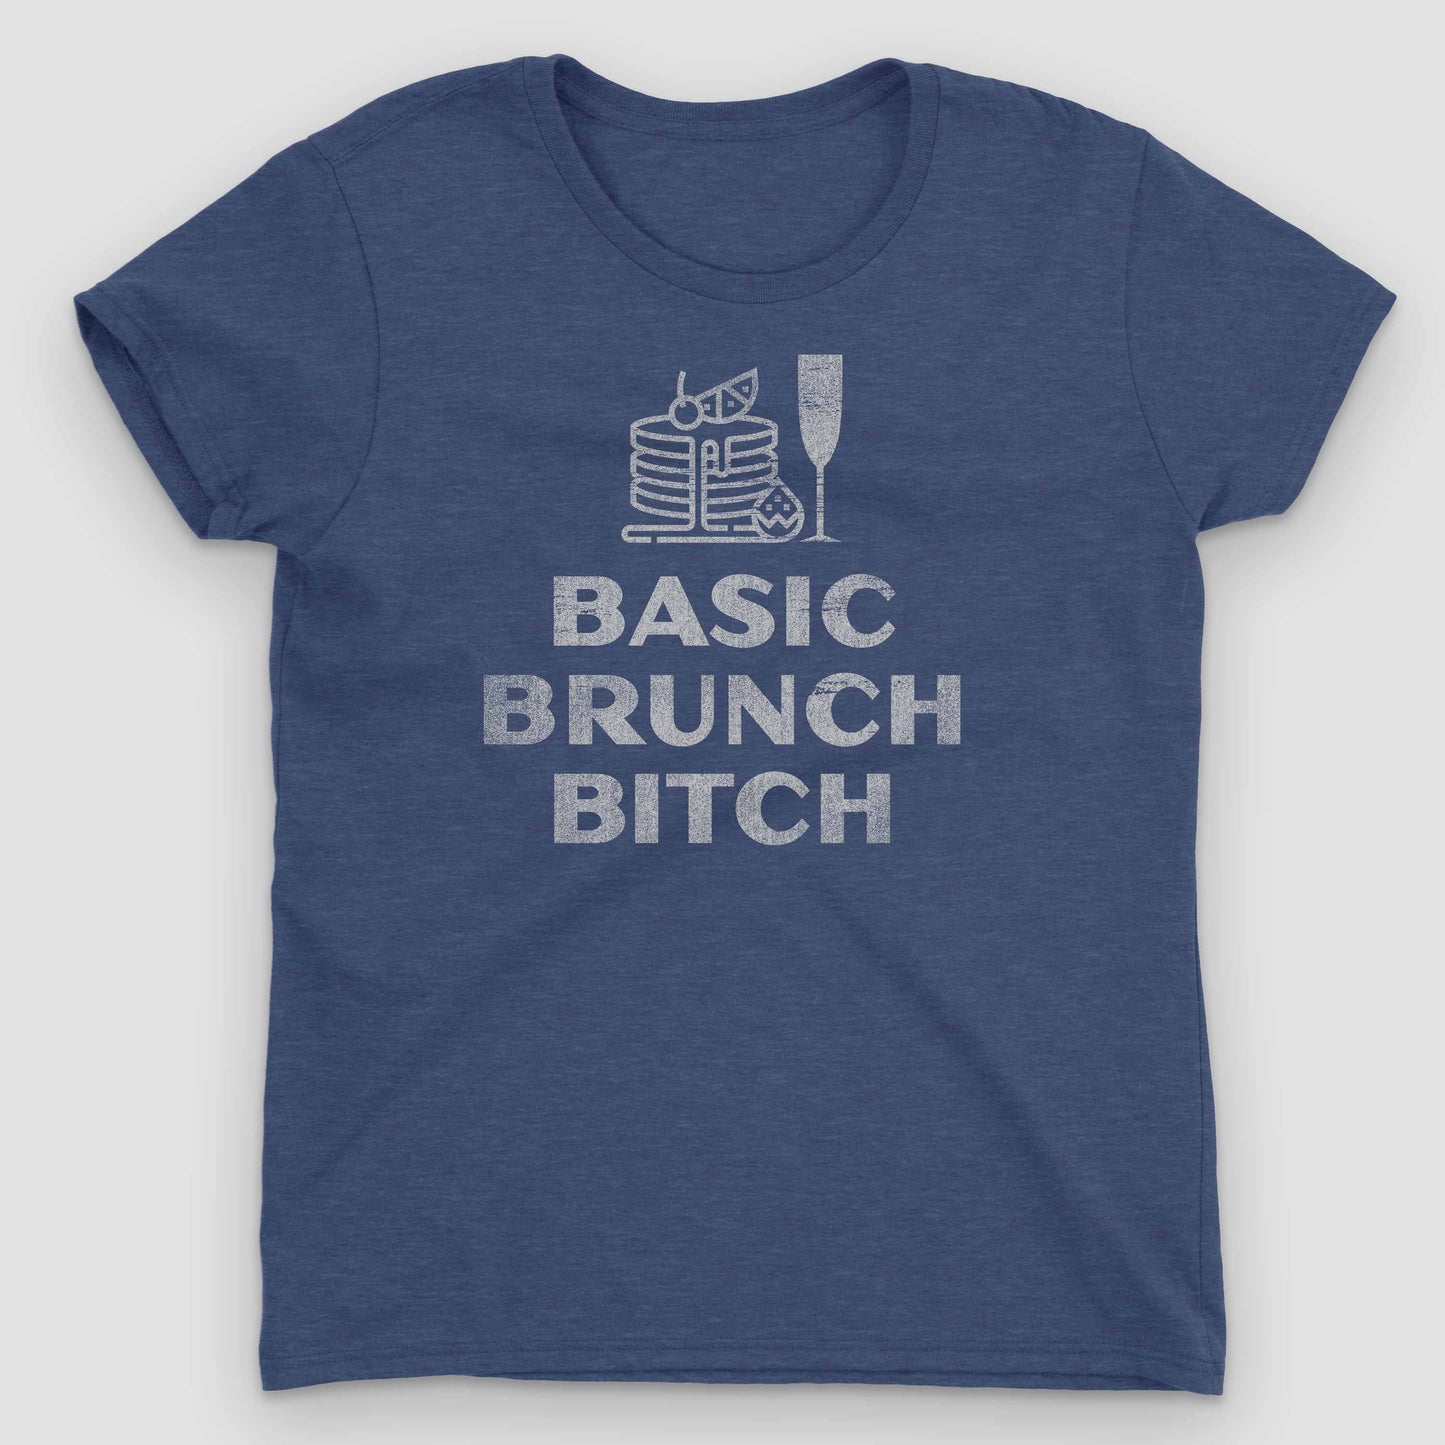 Heather Blue Basic Brunch Bitch Women's Graphic T-Shirt by Snaxtime